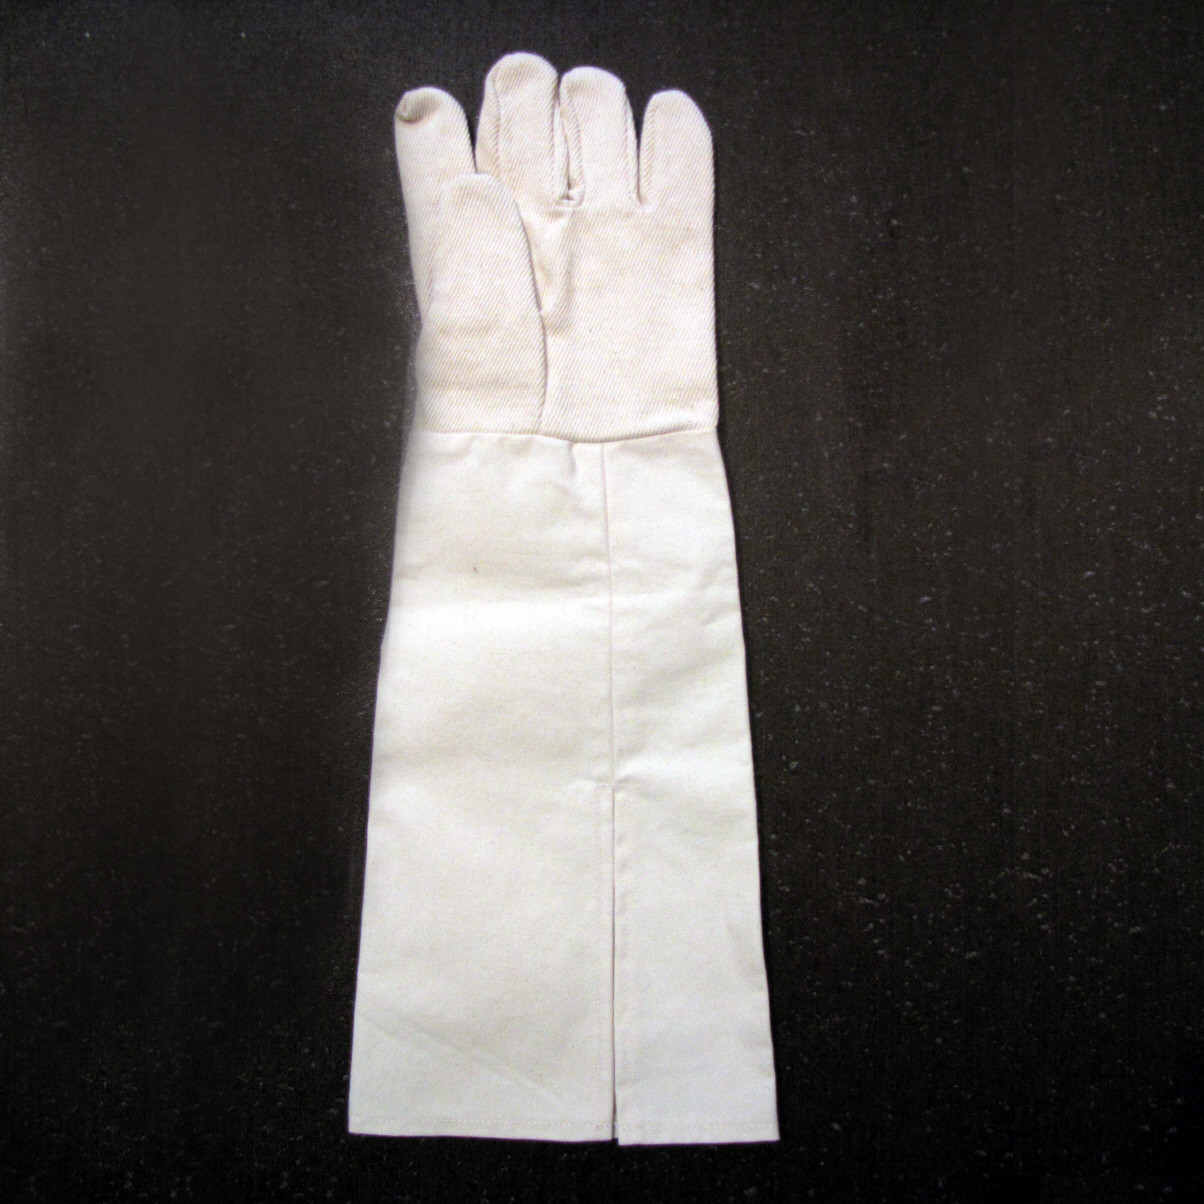 Single right hand Glove (Bird Arm Illusion)